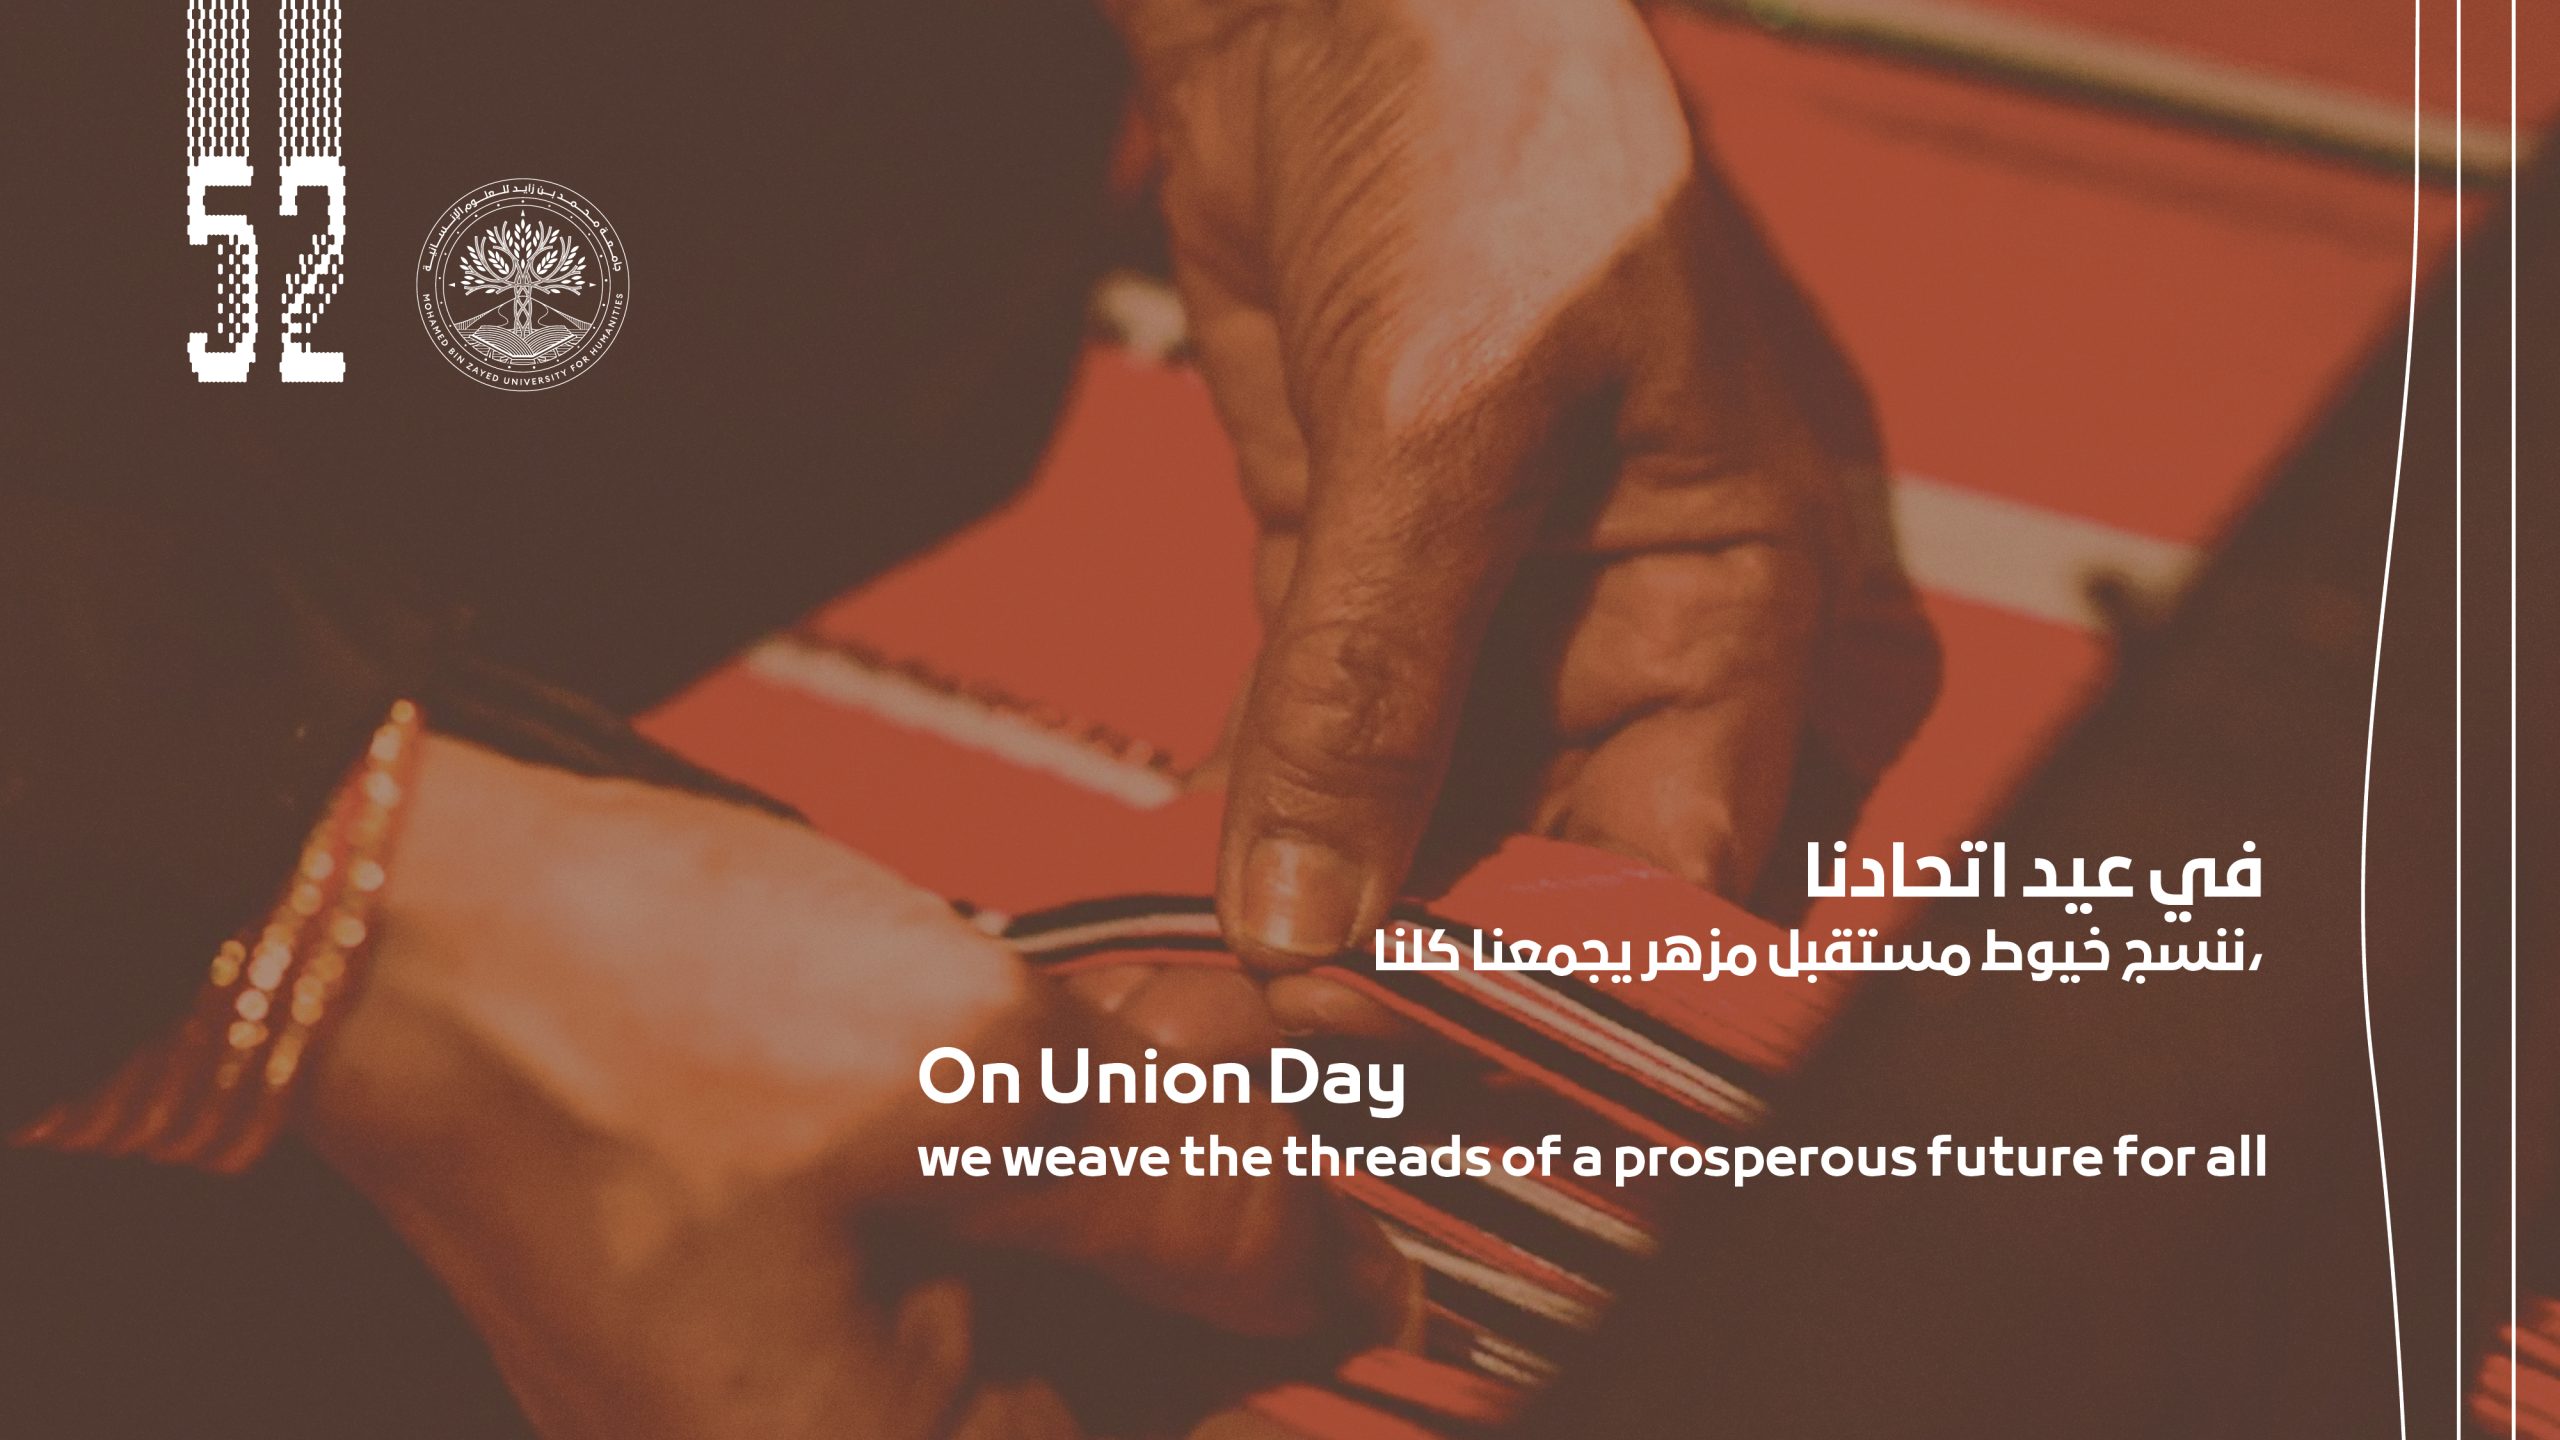 University celebration of Union Day